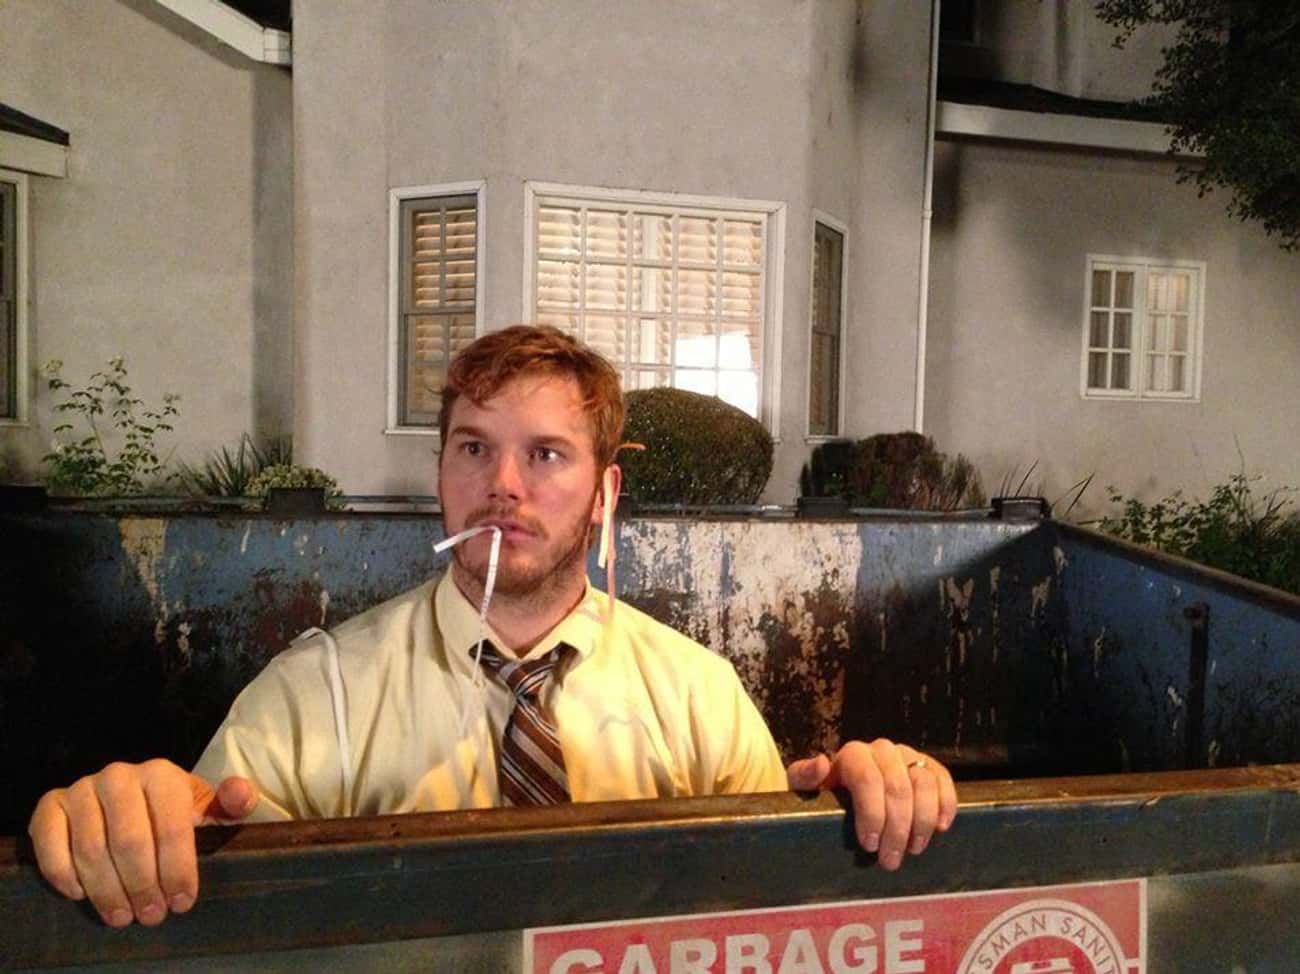 Chris Pratt, Just Chilling in Some Trash